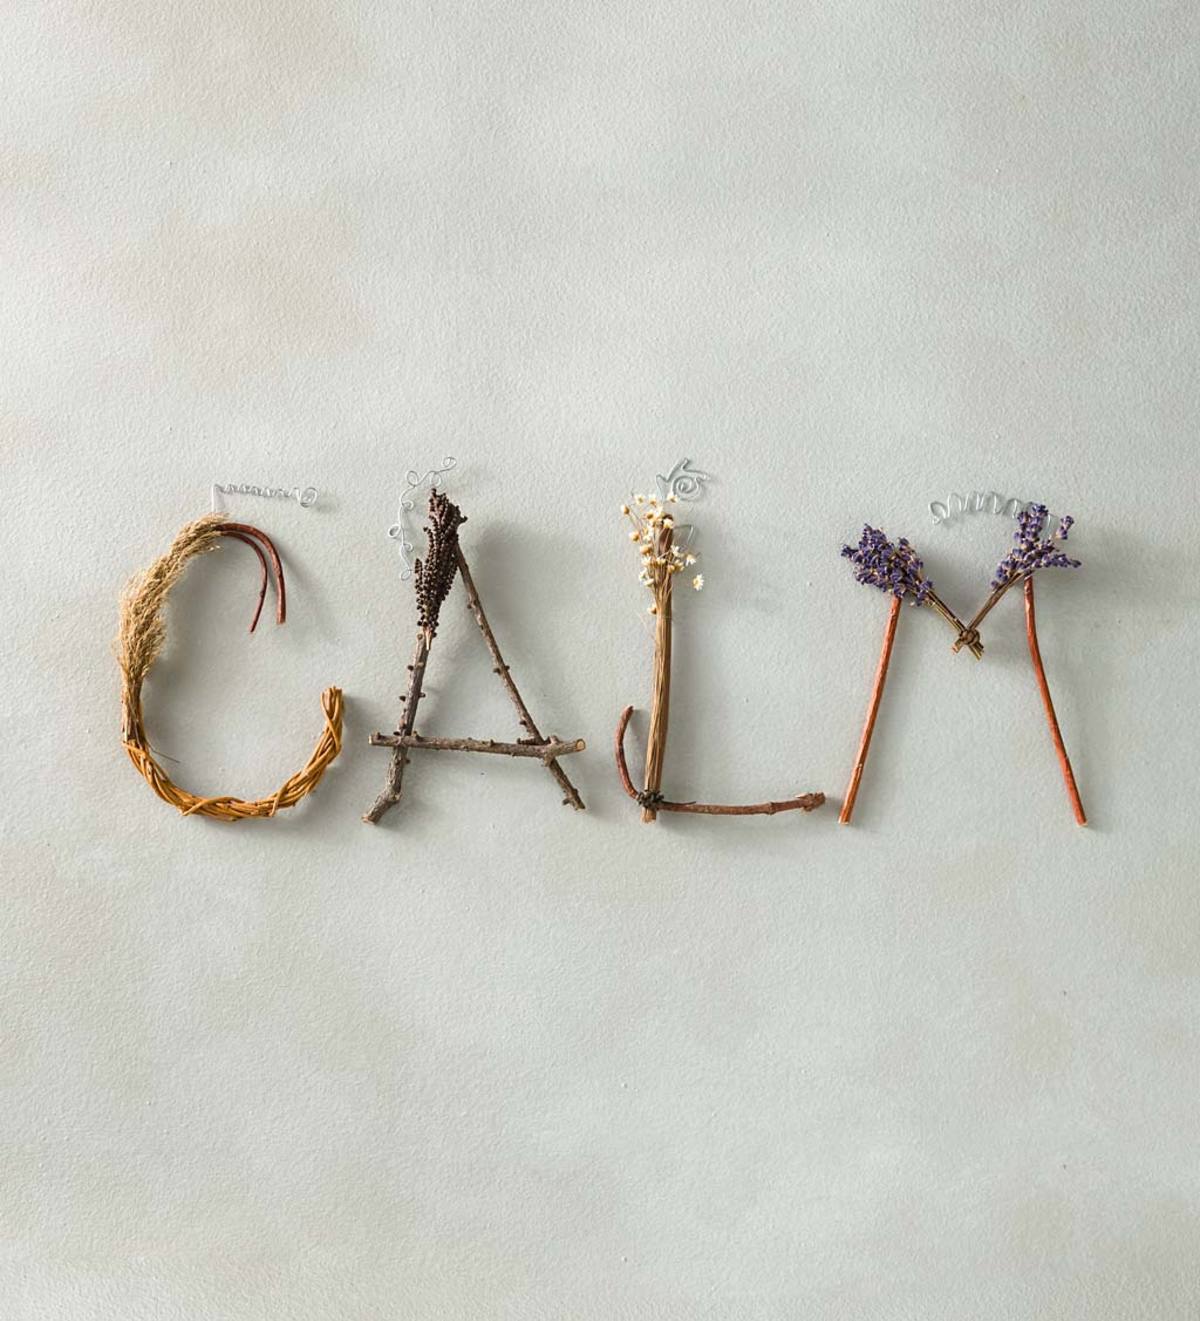 "Calm" Twig Letter Art